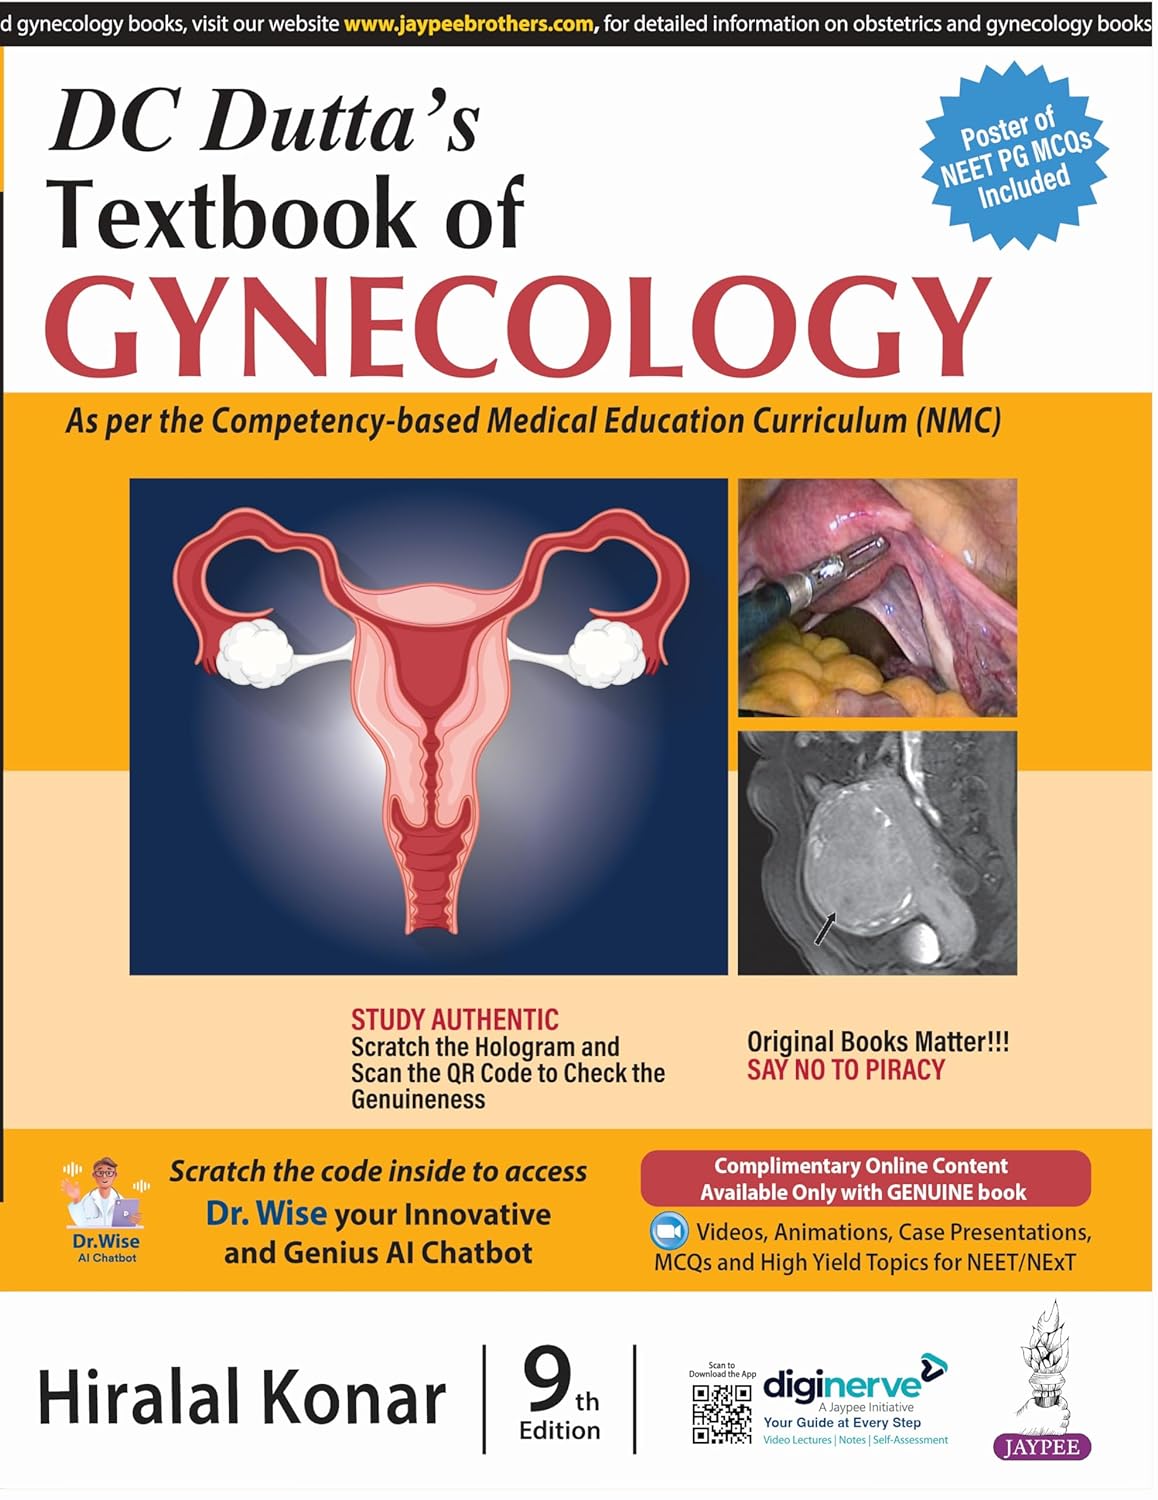 DC Dutta’s Textbook of Gynecology- HIRALAL KONAR